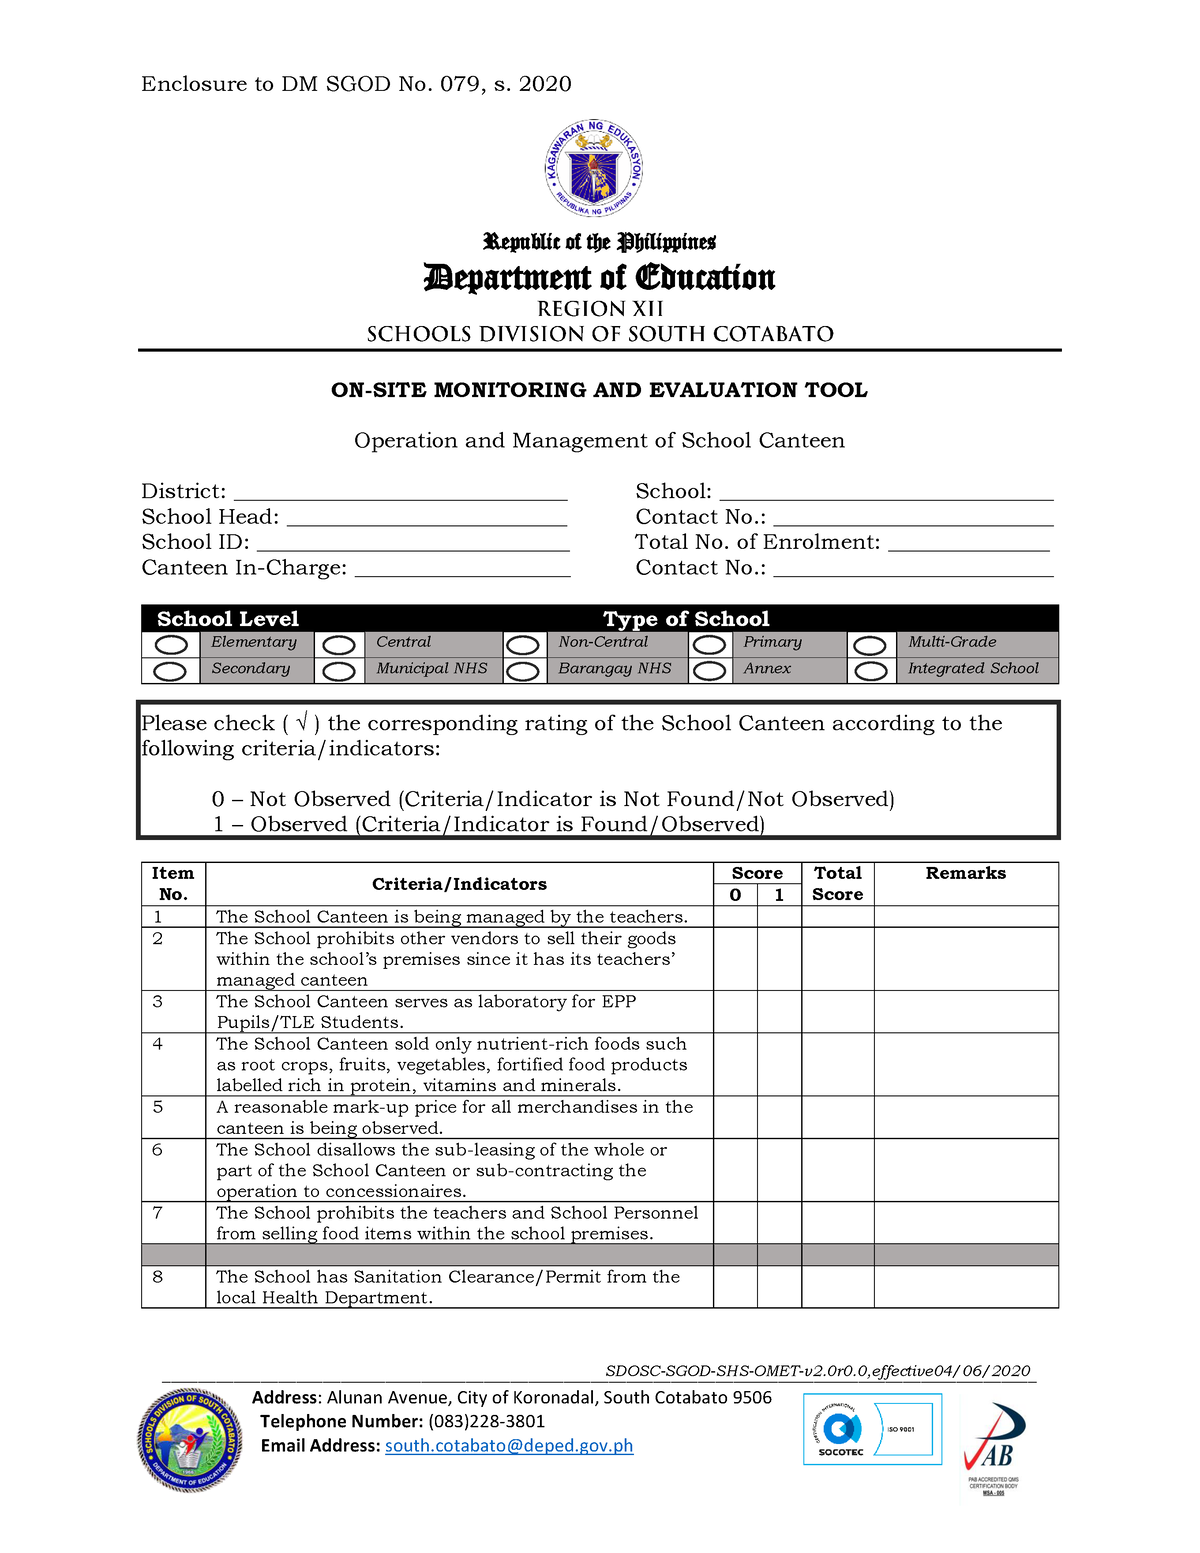 School Canteen Monitoring And Evaluation Tool Enclosure To Dm Sgod No 079 S 2020 Republic 2285